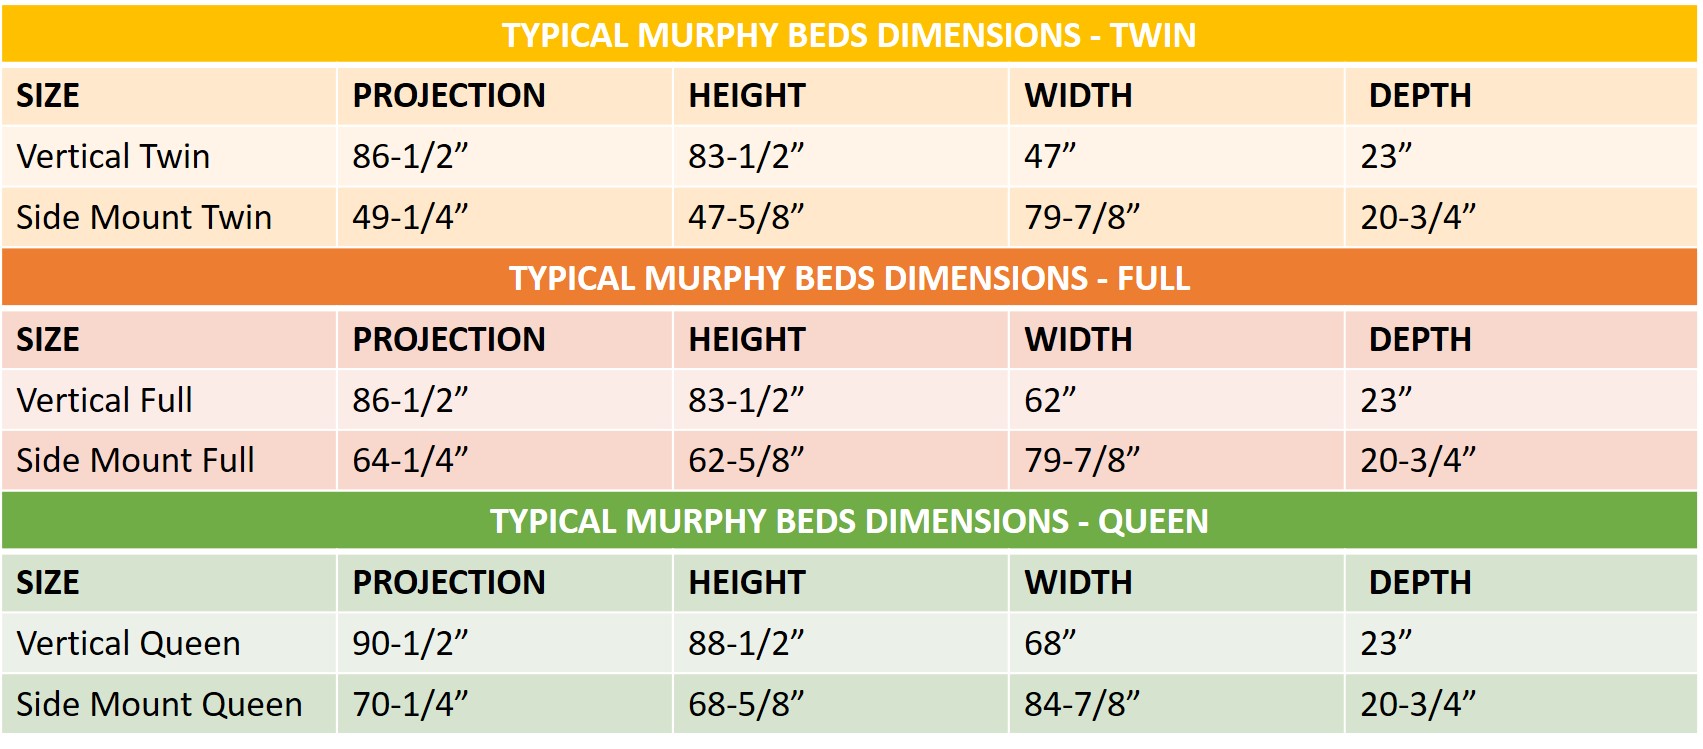 Murphy Beds Dimensions & Design Ideas